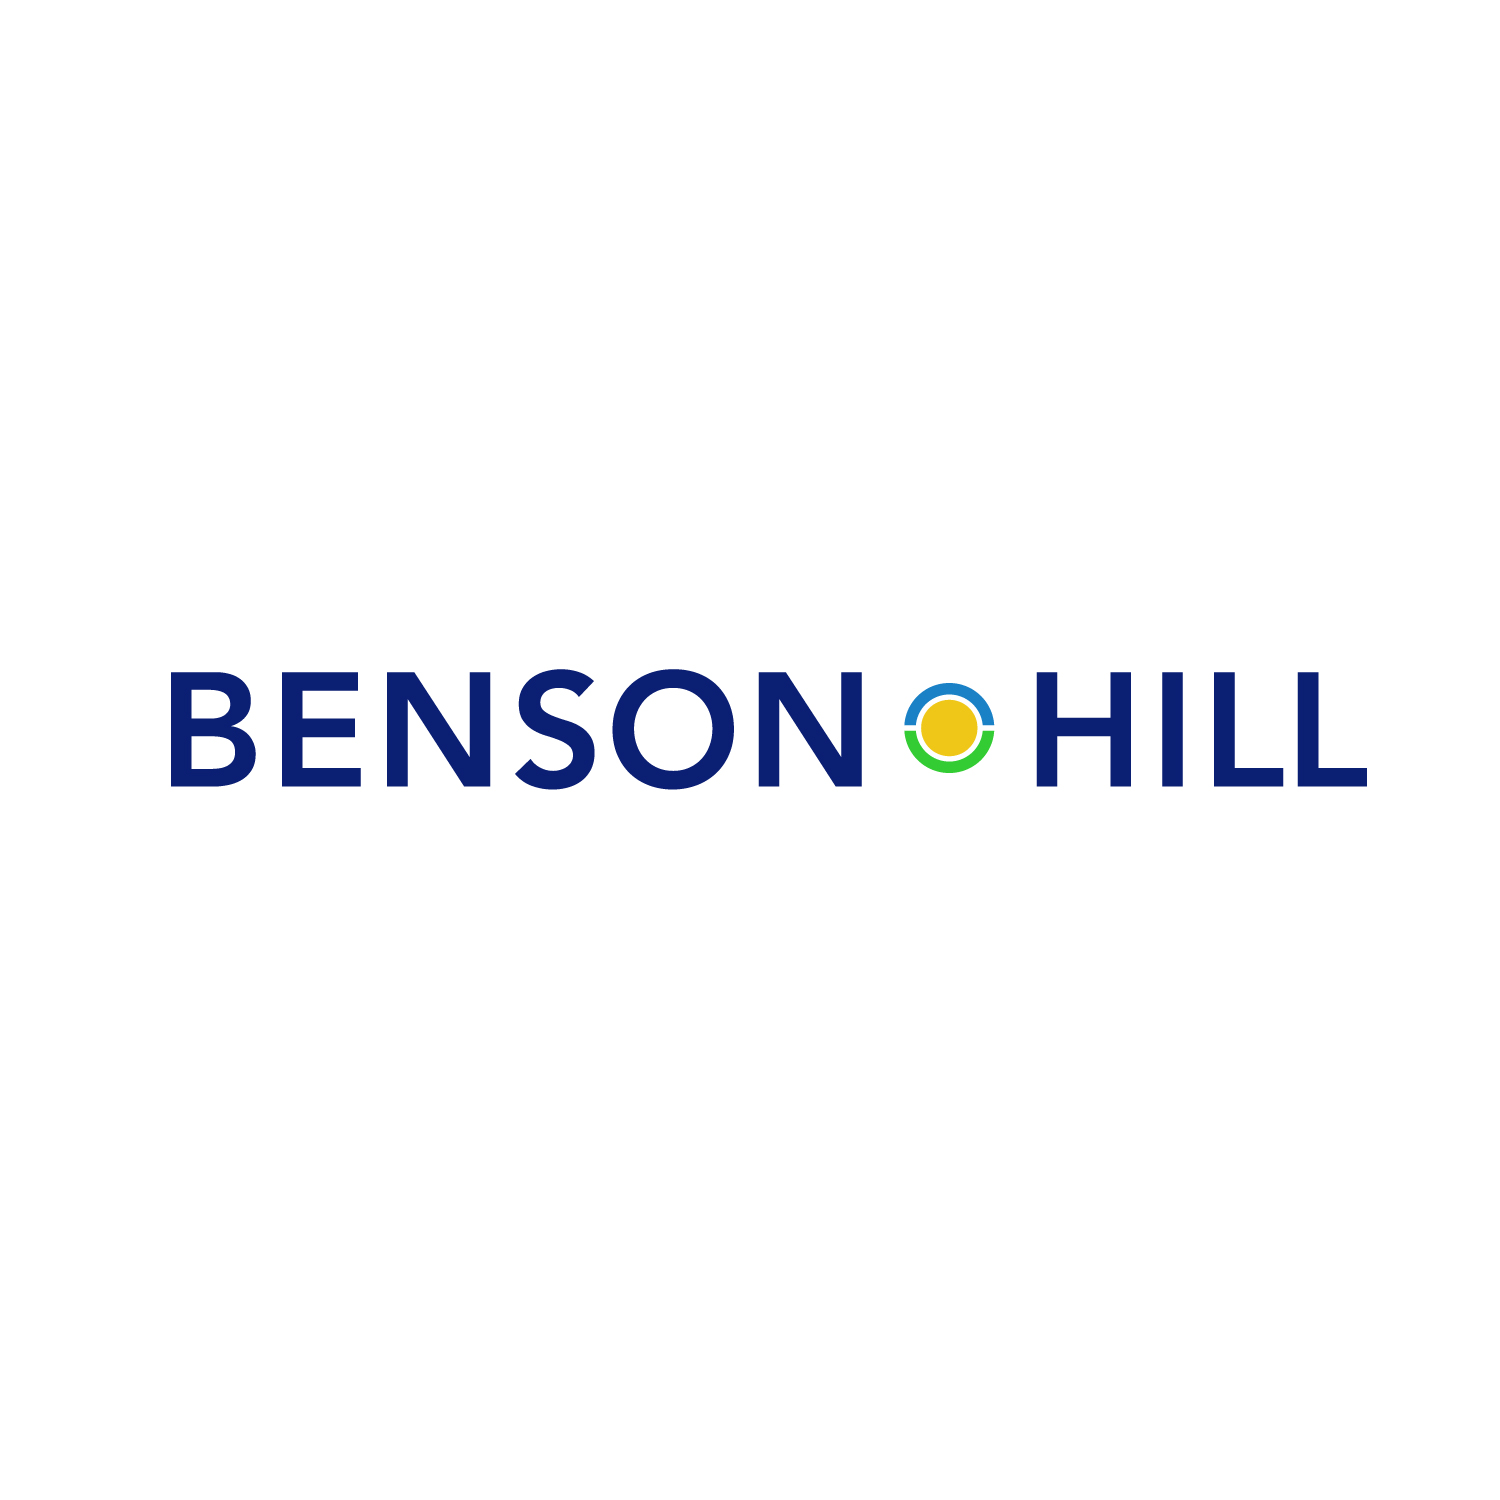 Benson Hill Biosystems Logo